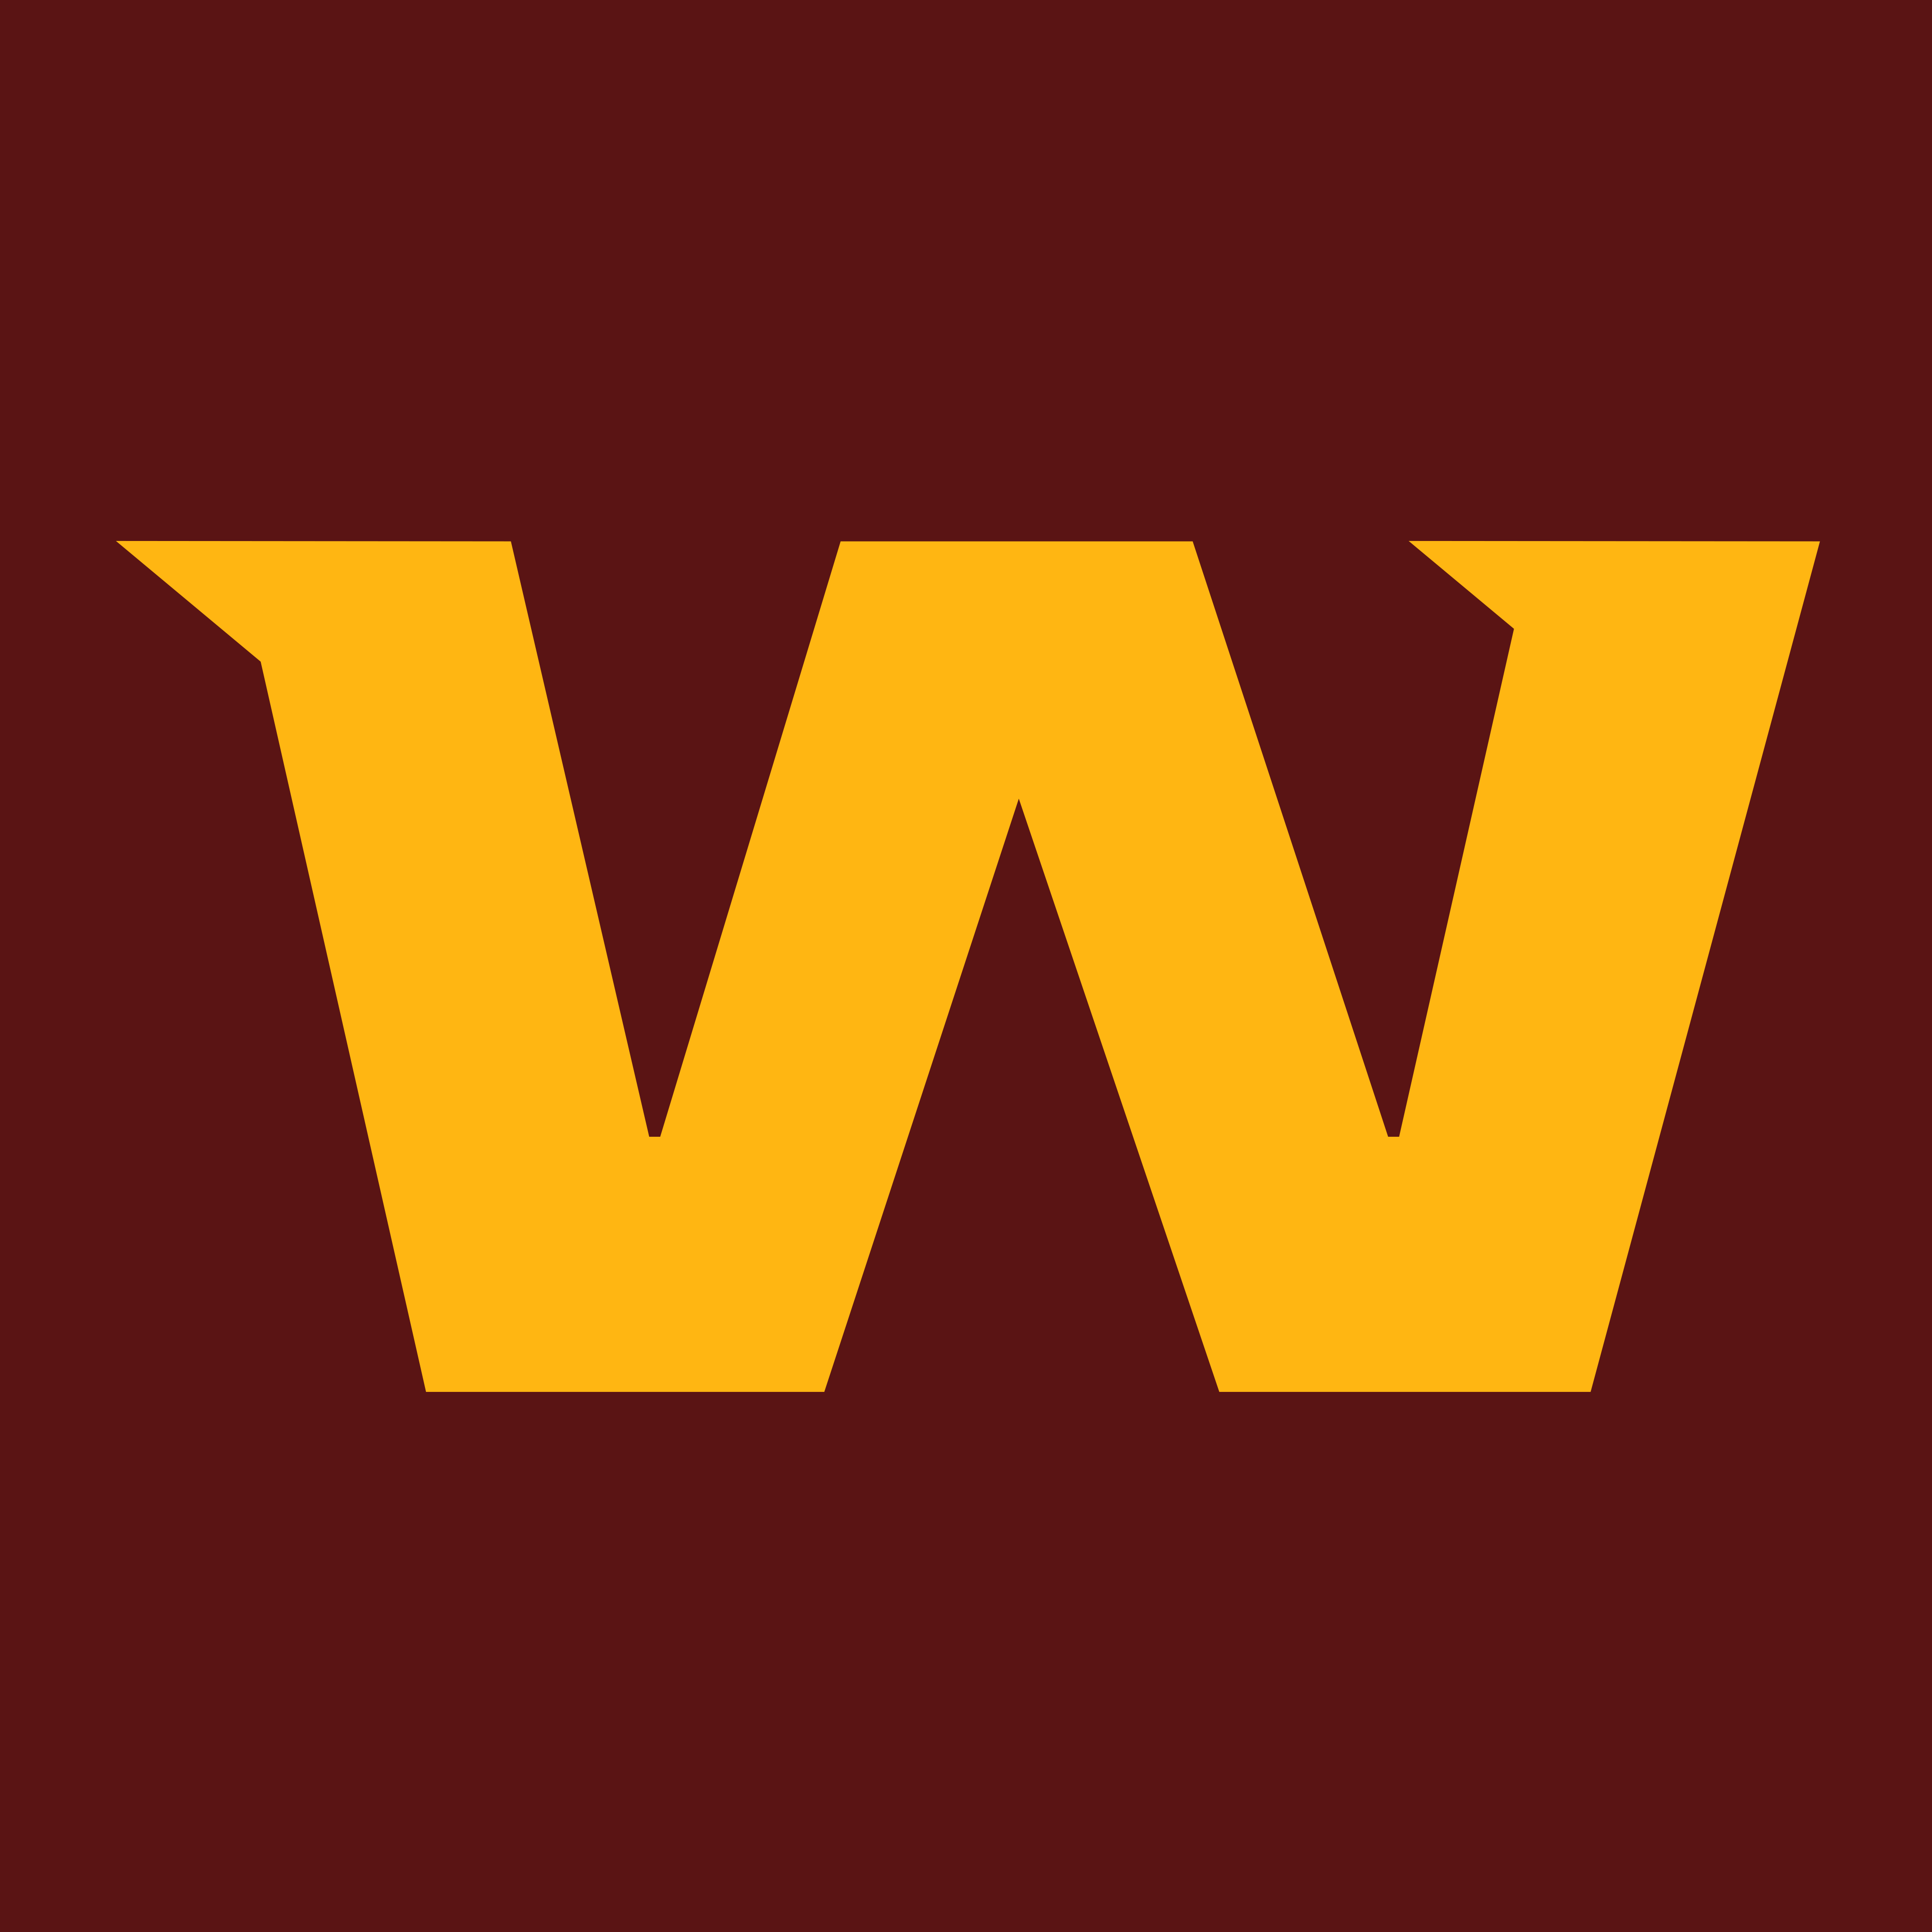 washington football team logo - Washington Football Team Logo